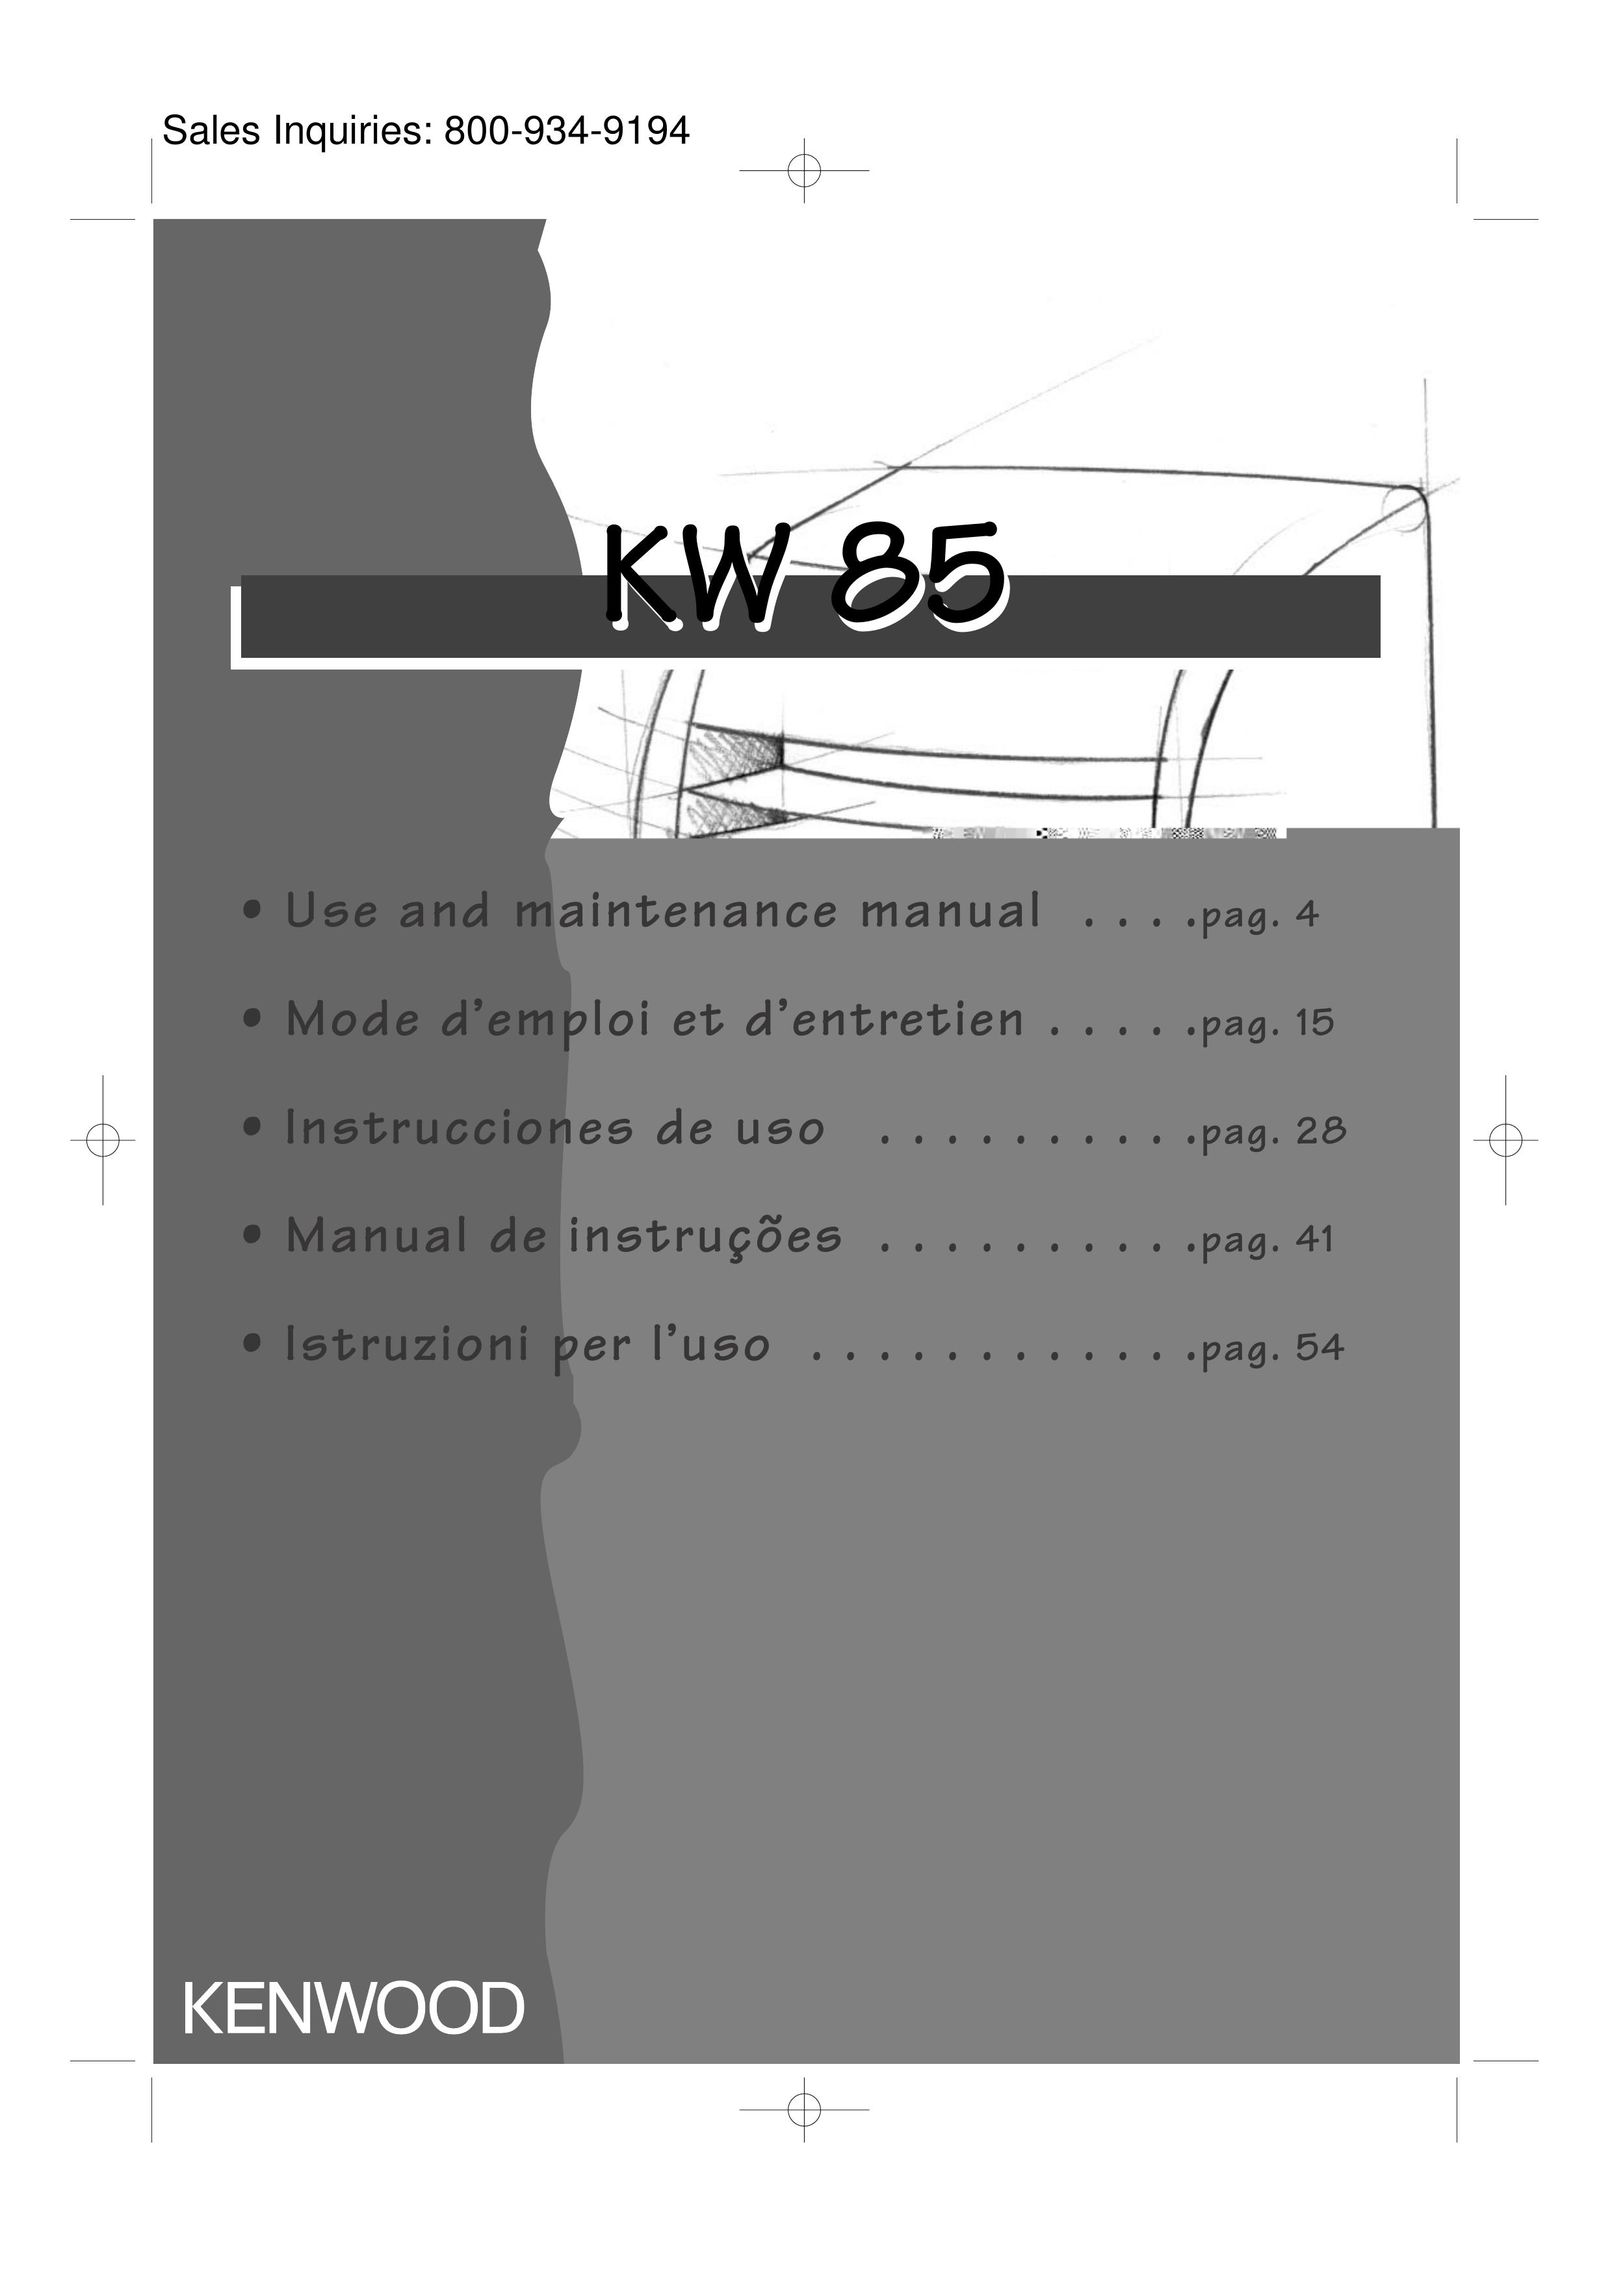 DeLonghi KW 85 Air Conditioner User Manual